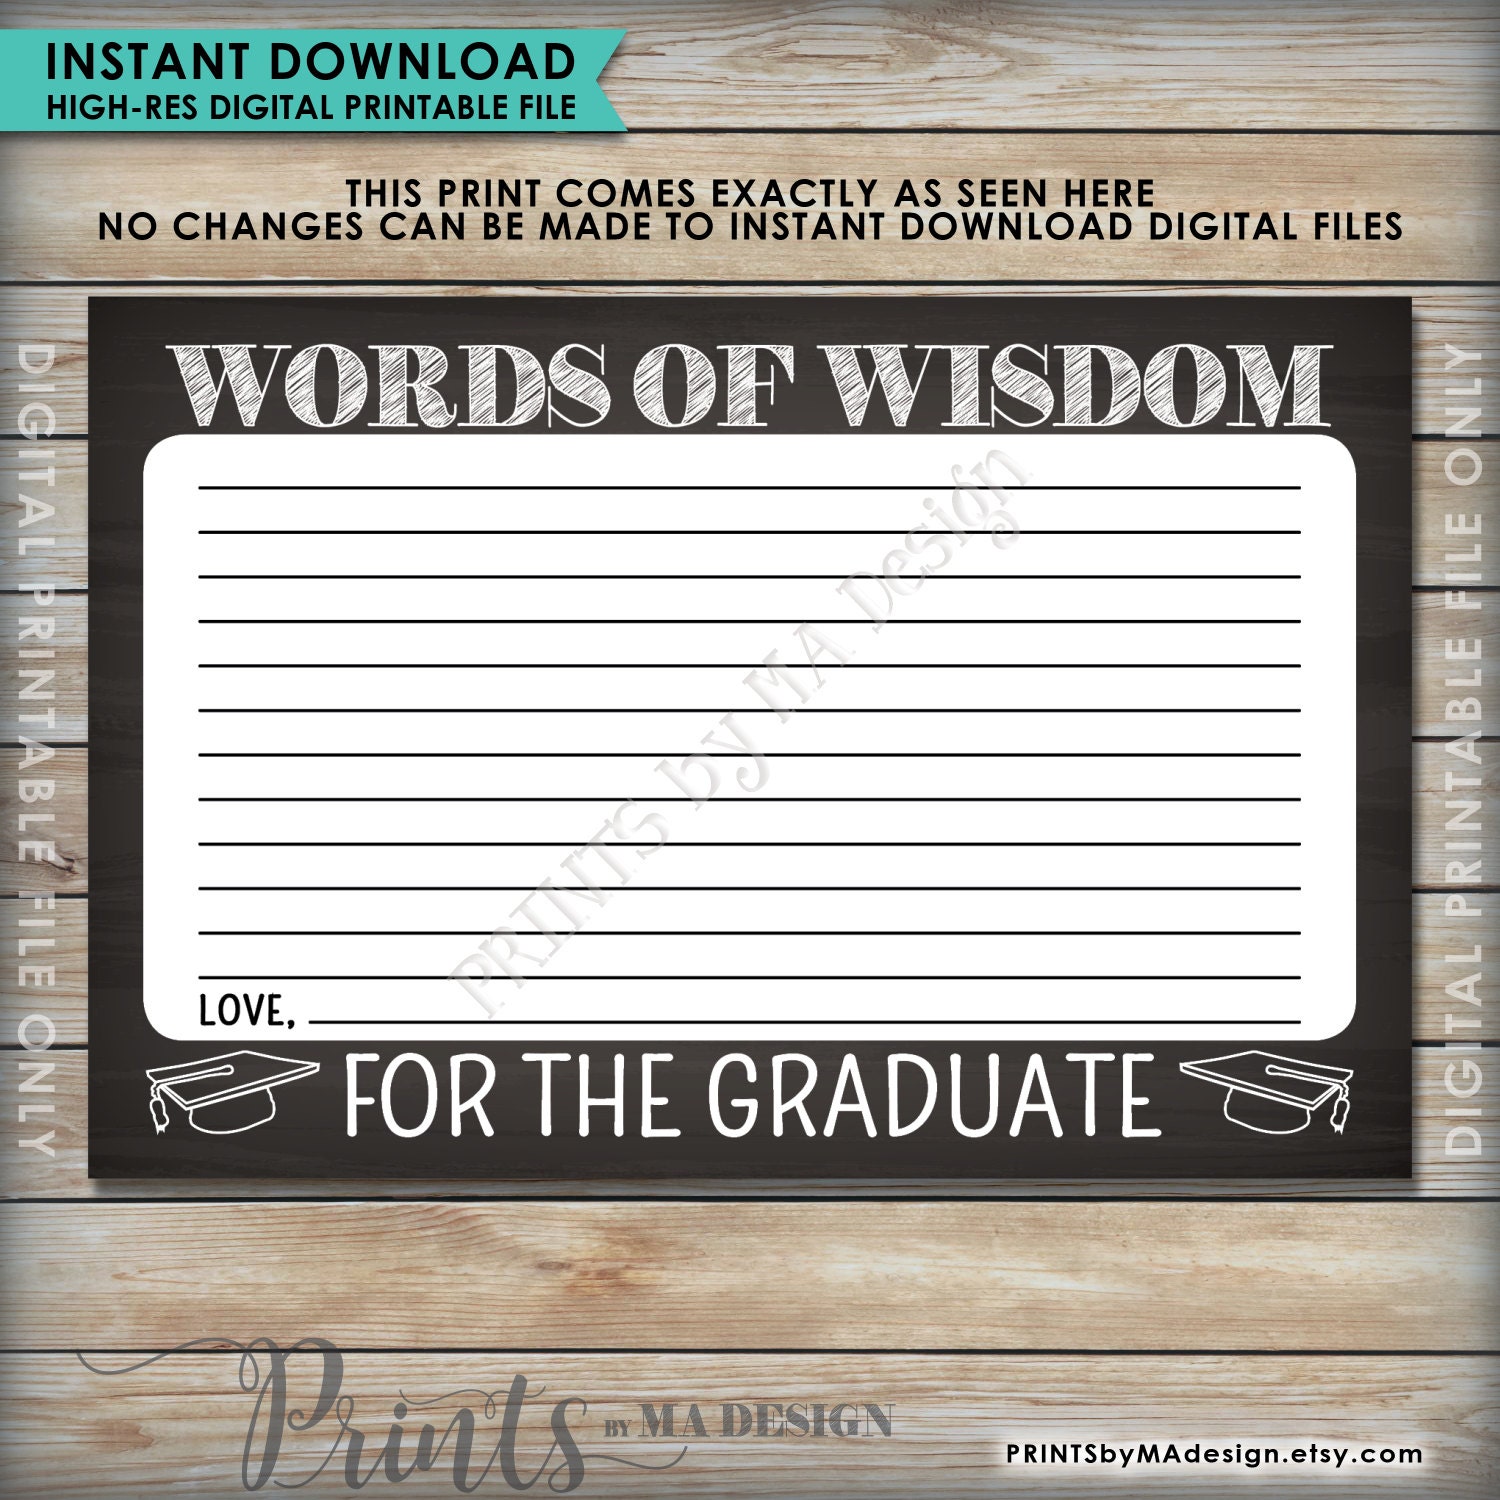 advice-for-graduate-words-of-wisdom-for-the-graduate-printable